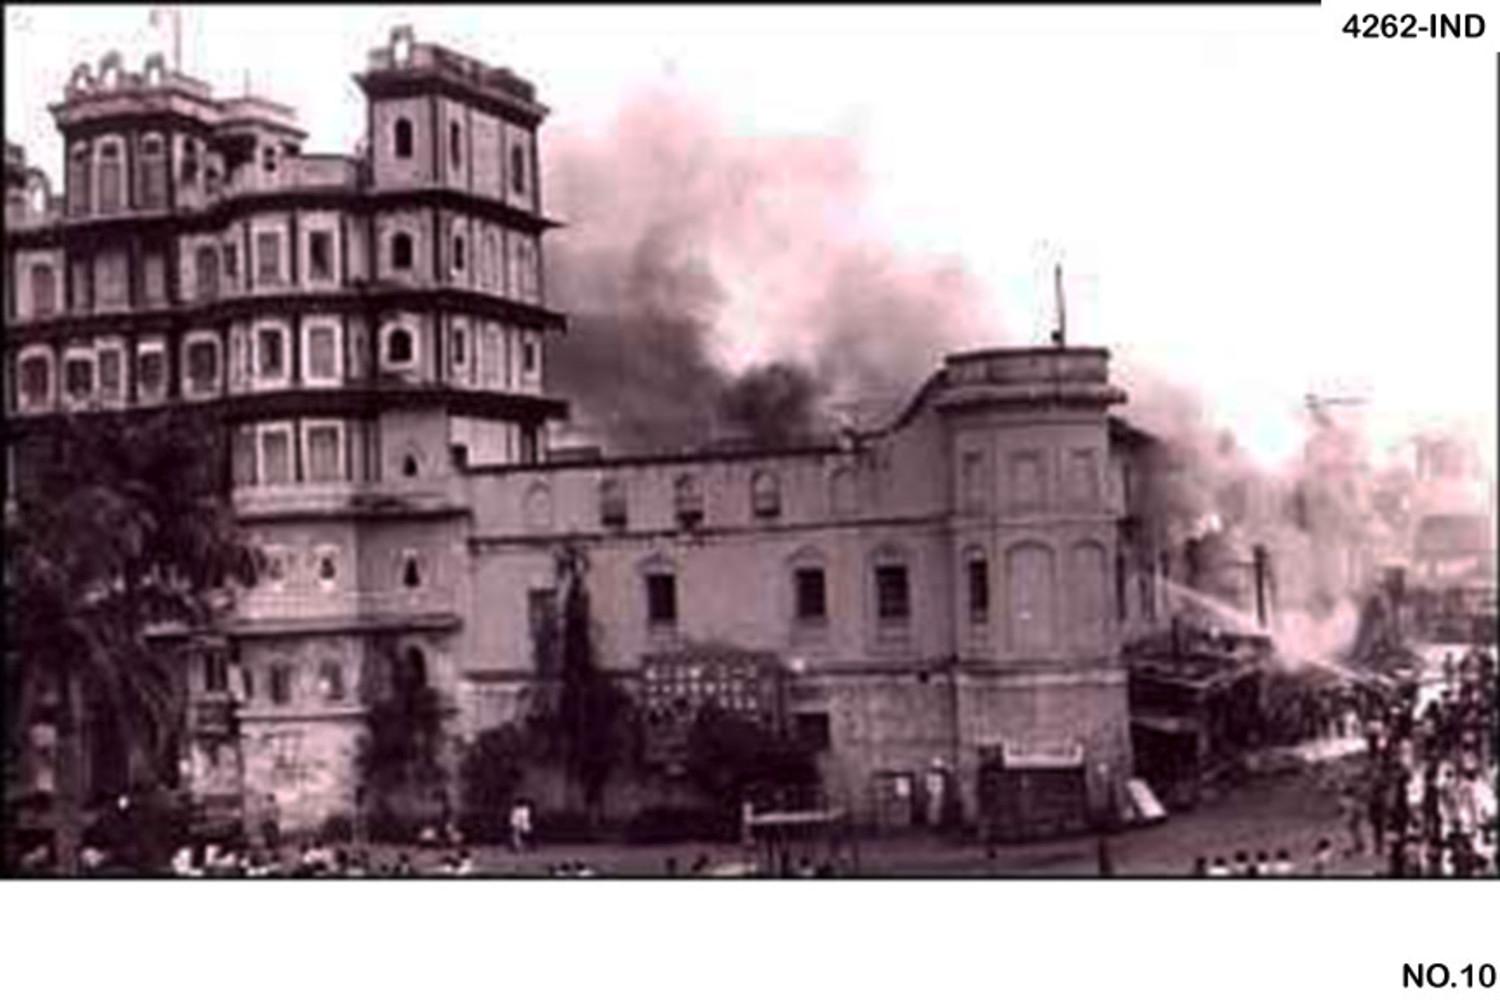 Rajbada in 1984 riots burning